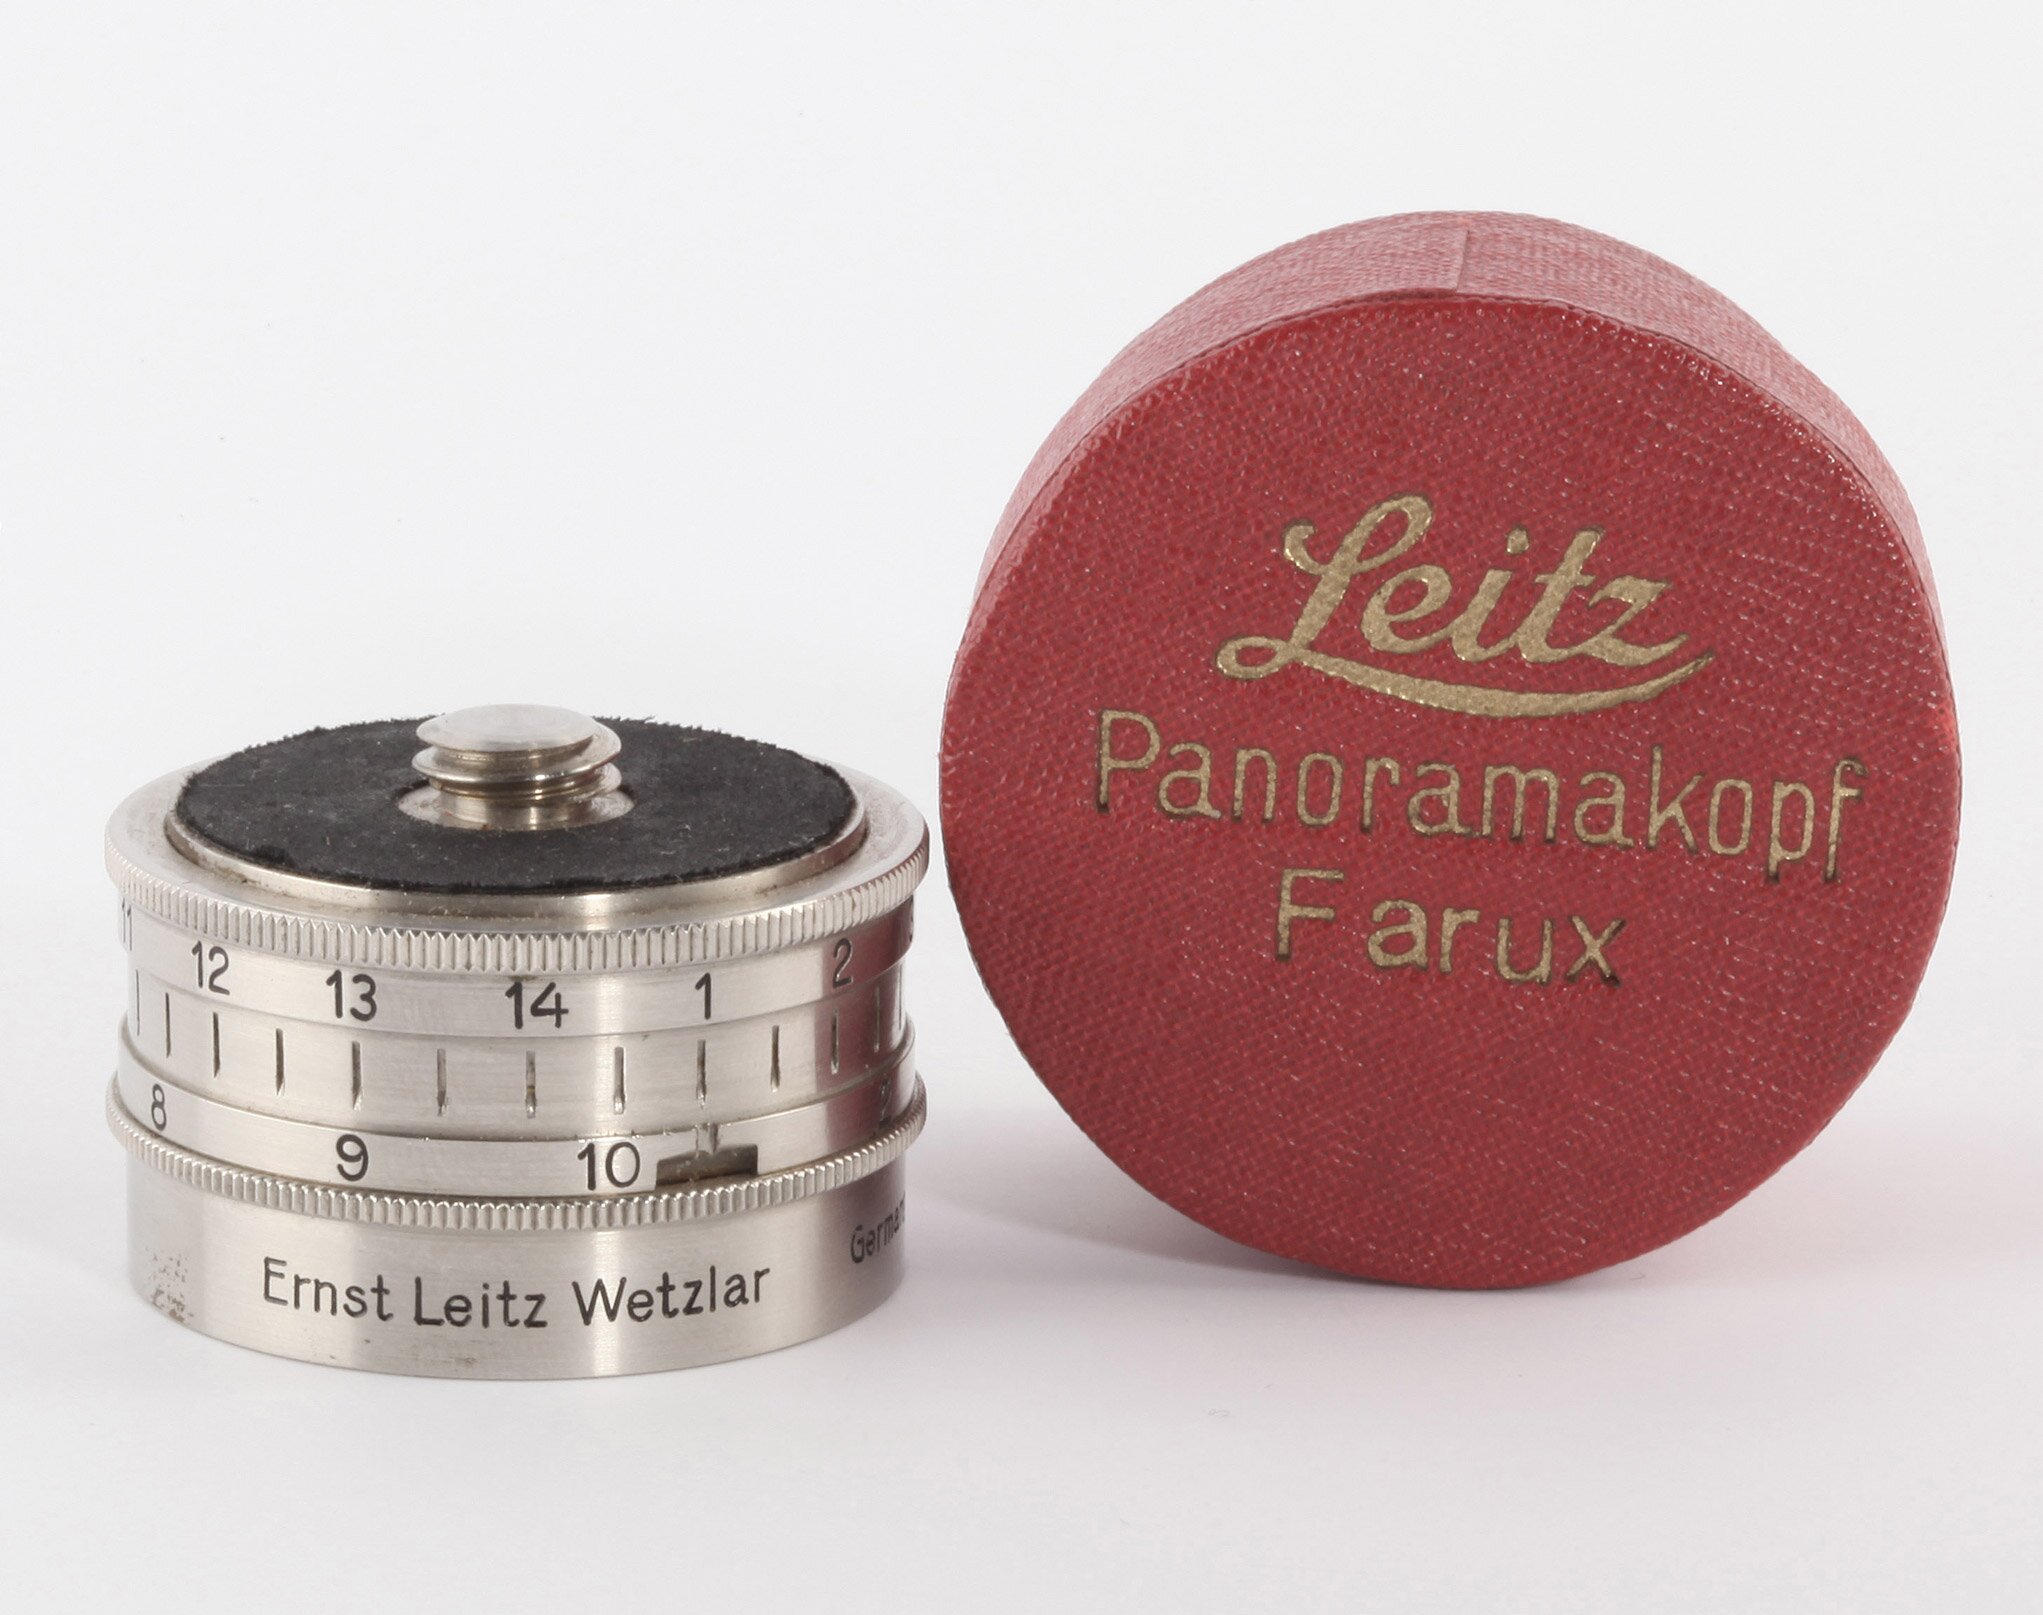 LEICA Panorama-Kopf panoramic head Nickel FARUX Leitz 50mm red box